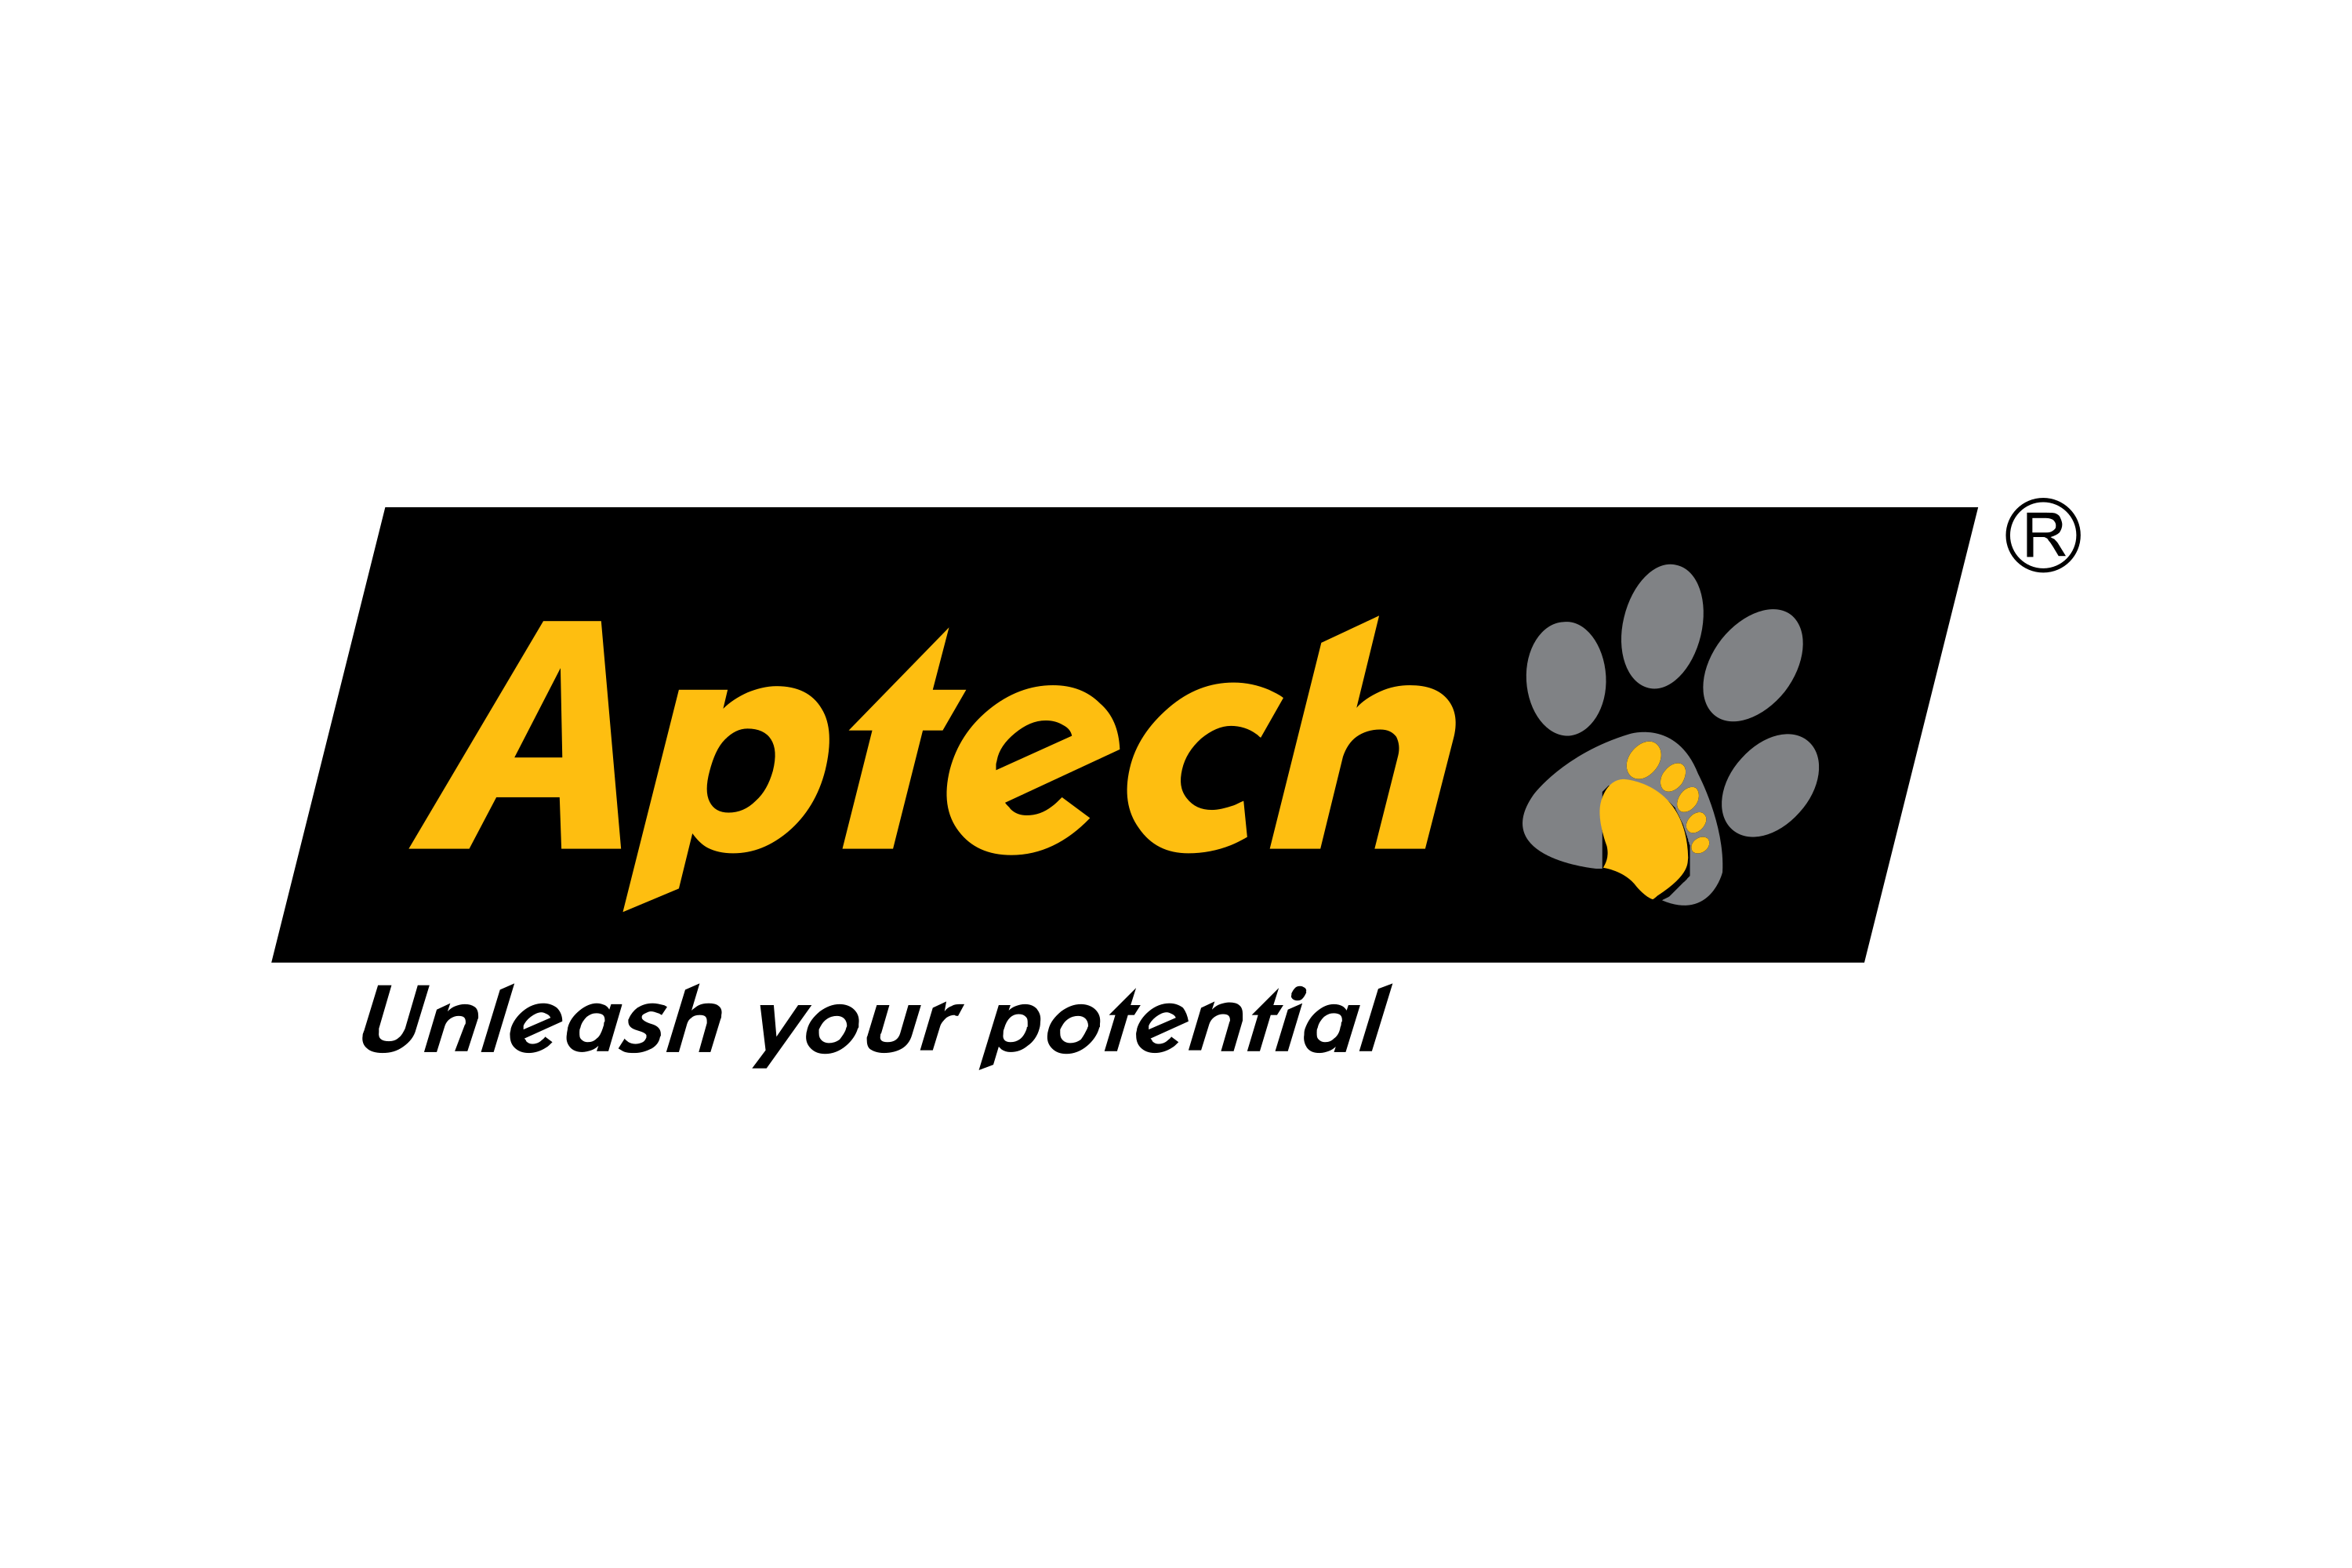 Aptech